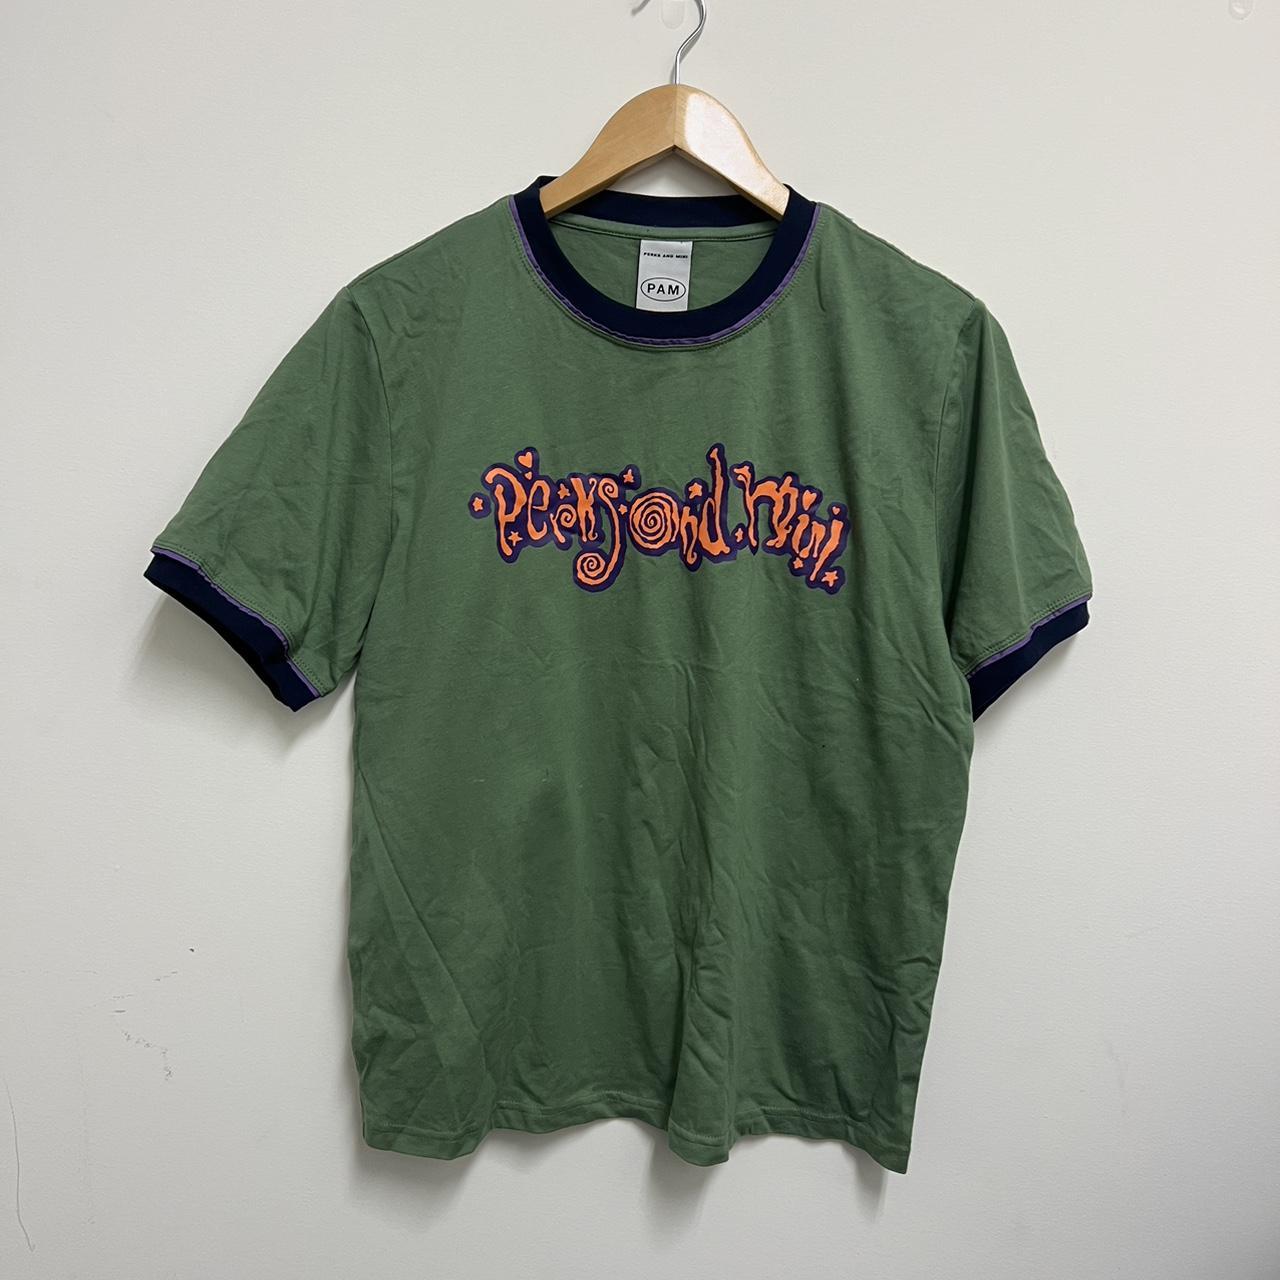 Perks and Mini Men's T-shirt | Depop